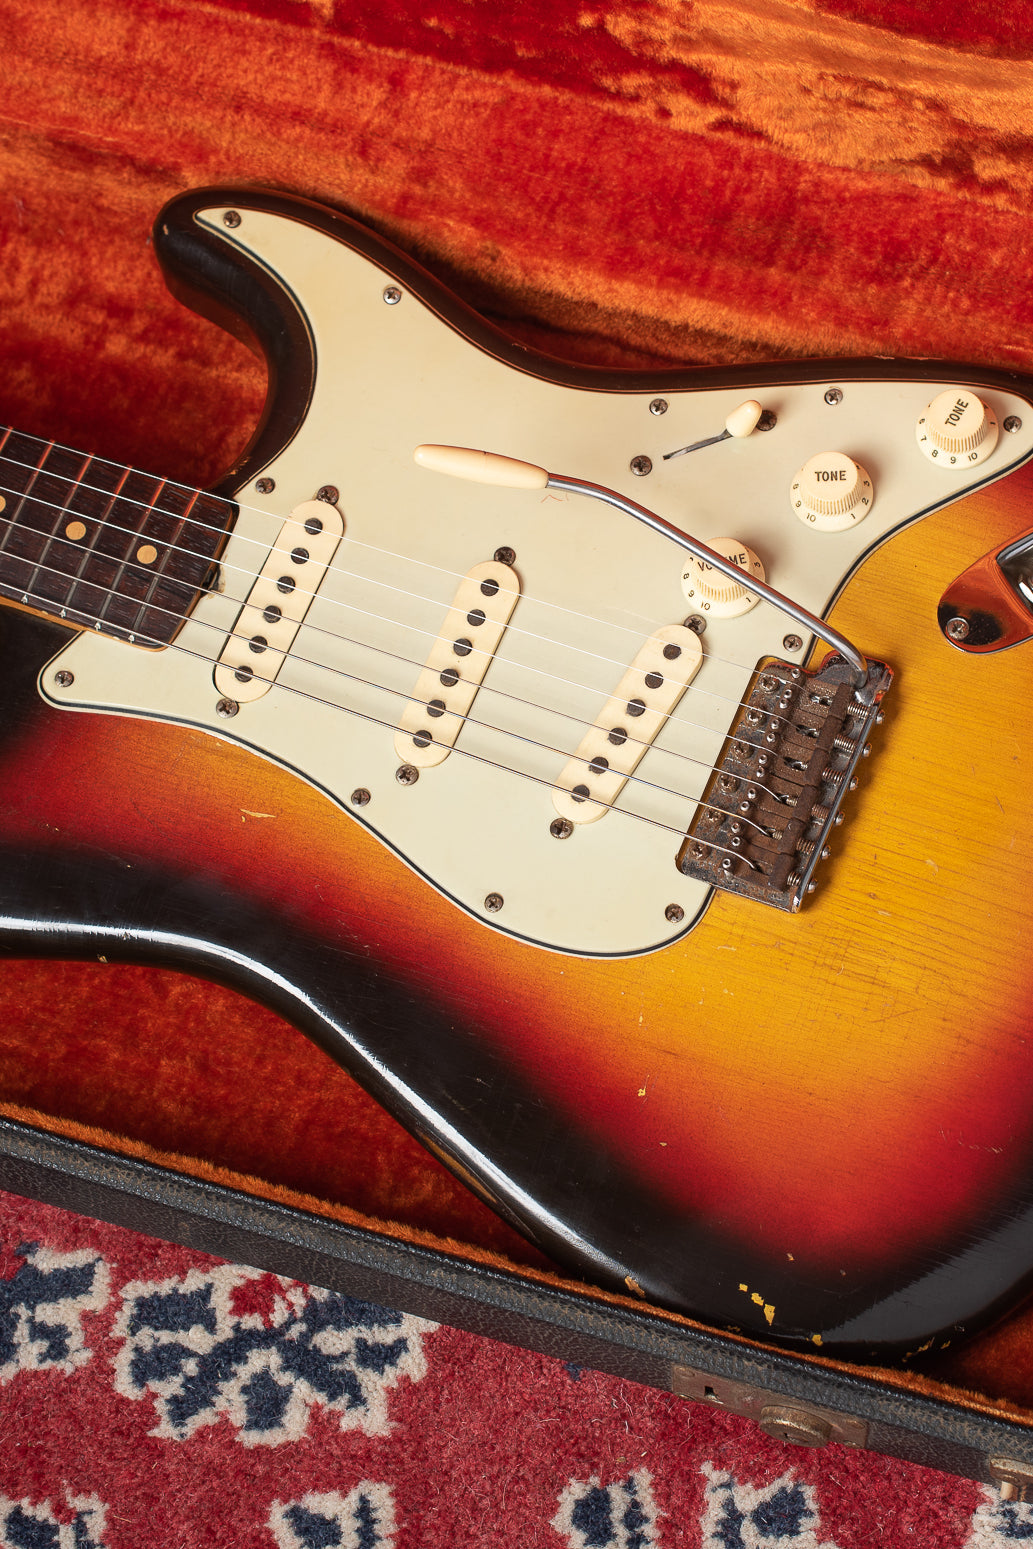 1963 Fender Stratocaster body in case